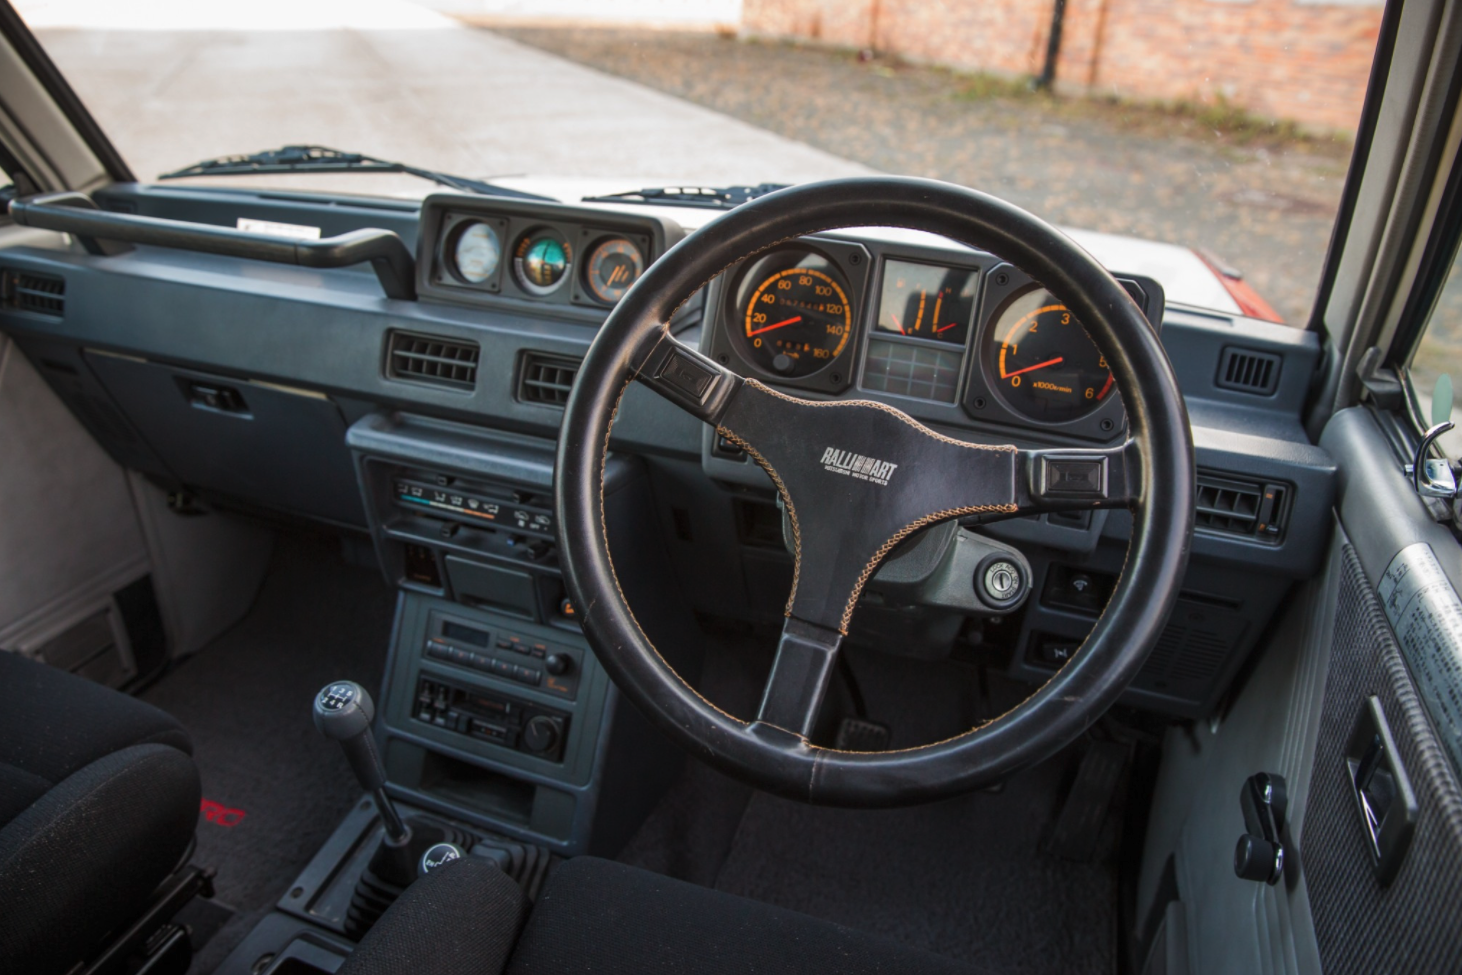 The 1988 Paris Dakar Edition Pajero interior steering wheel